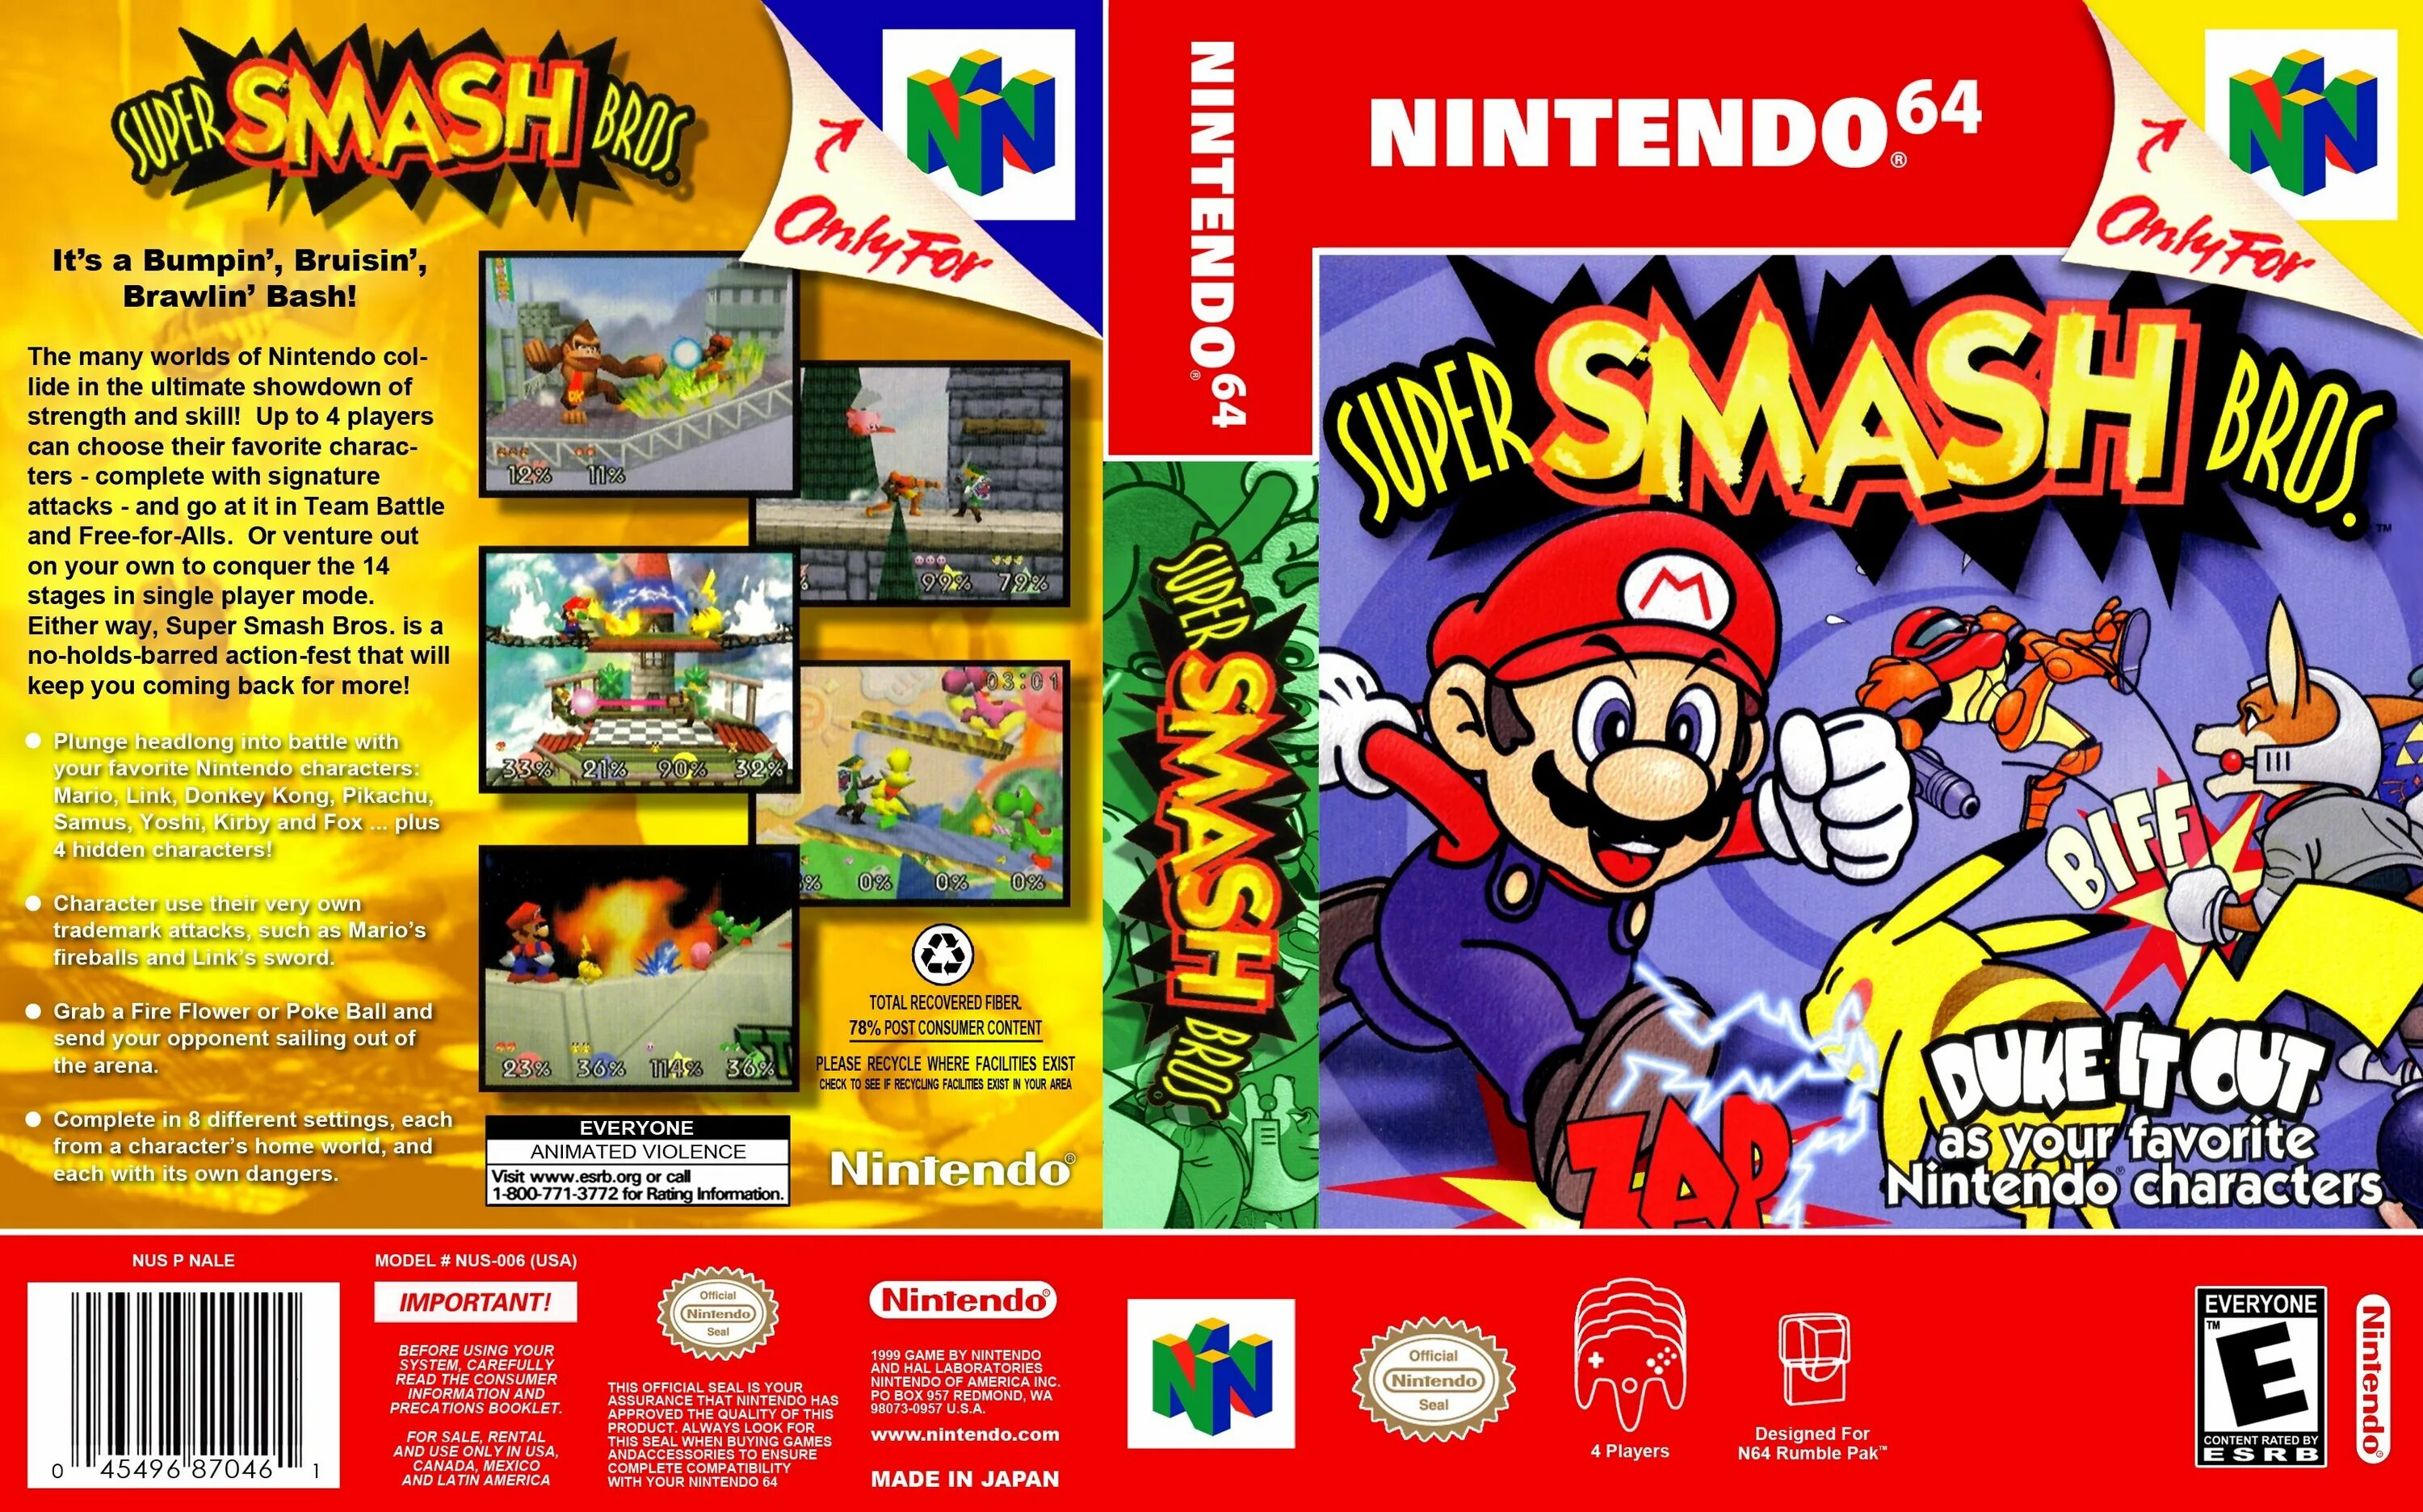 Nintendo 64 смэш БРОС. Супер Смаш БРОС Нинтендо 64. Super Smash Bros на Нинтендо 64. Super Smash Bros Nintendo 64.